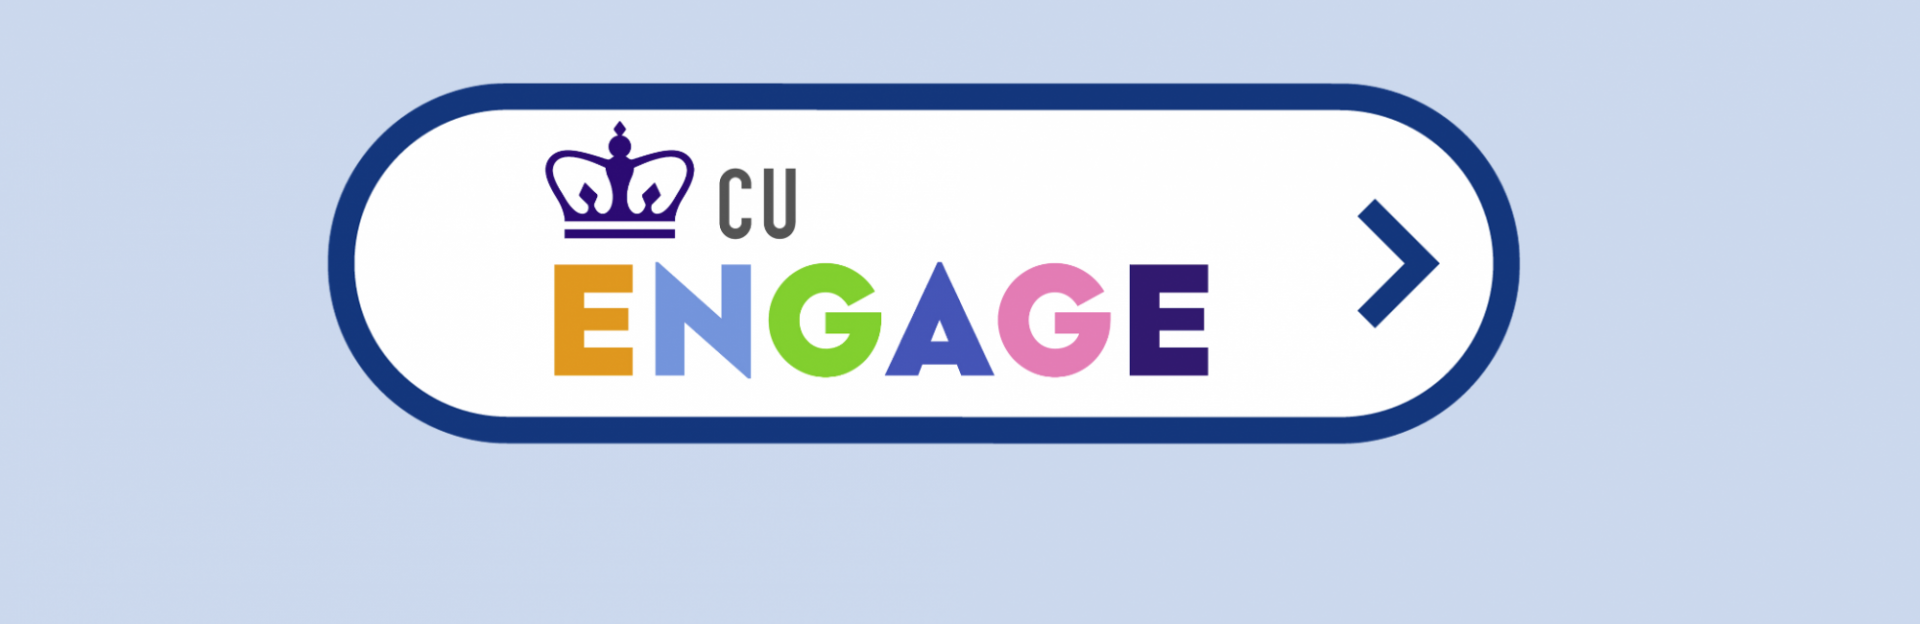 CU Engage: Civic Engagement at Columbia